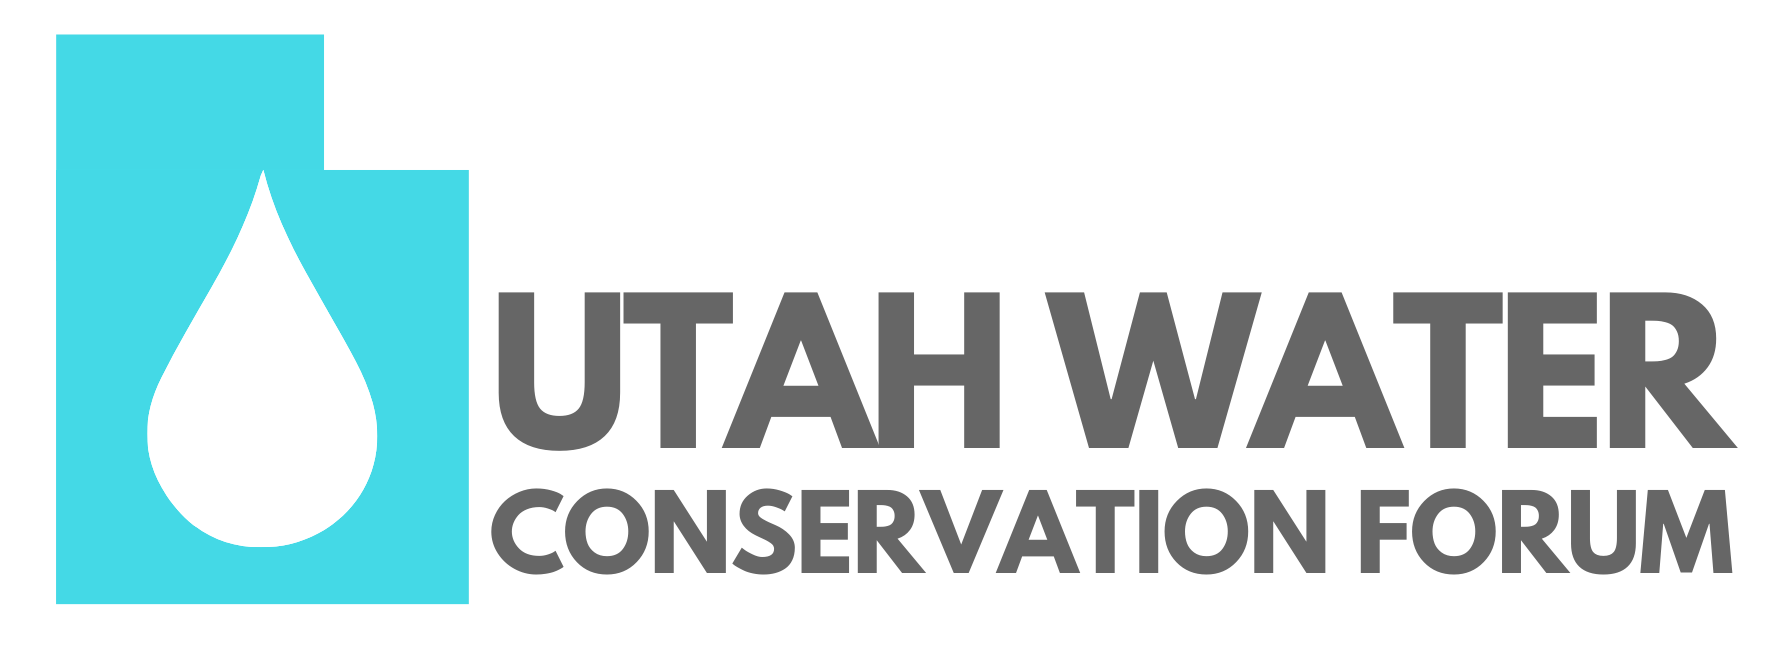 Utah Water Conservation Forum